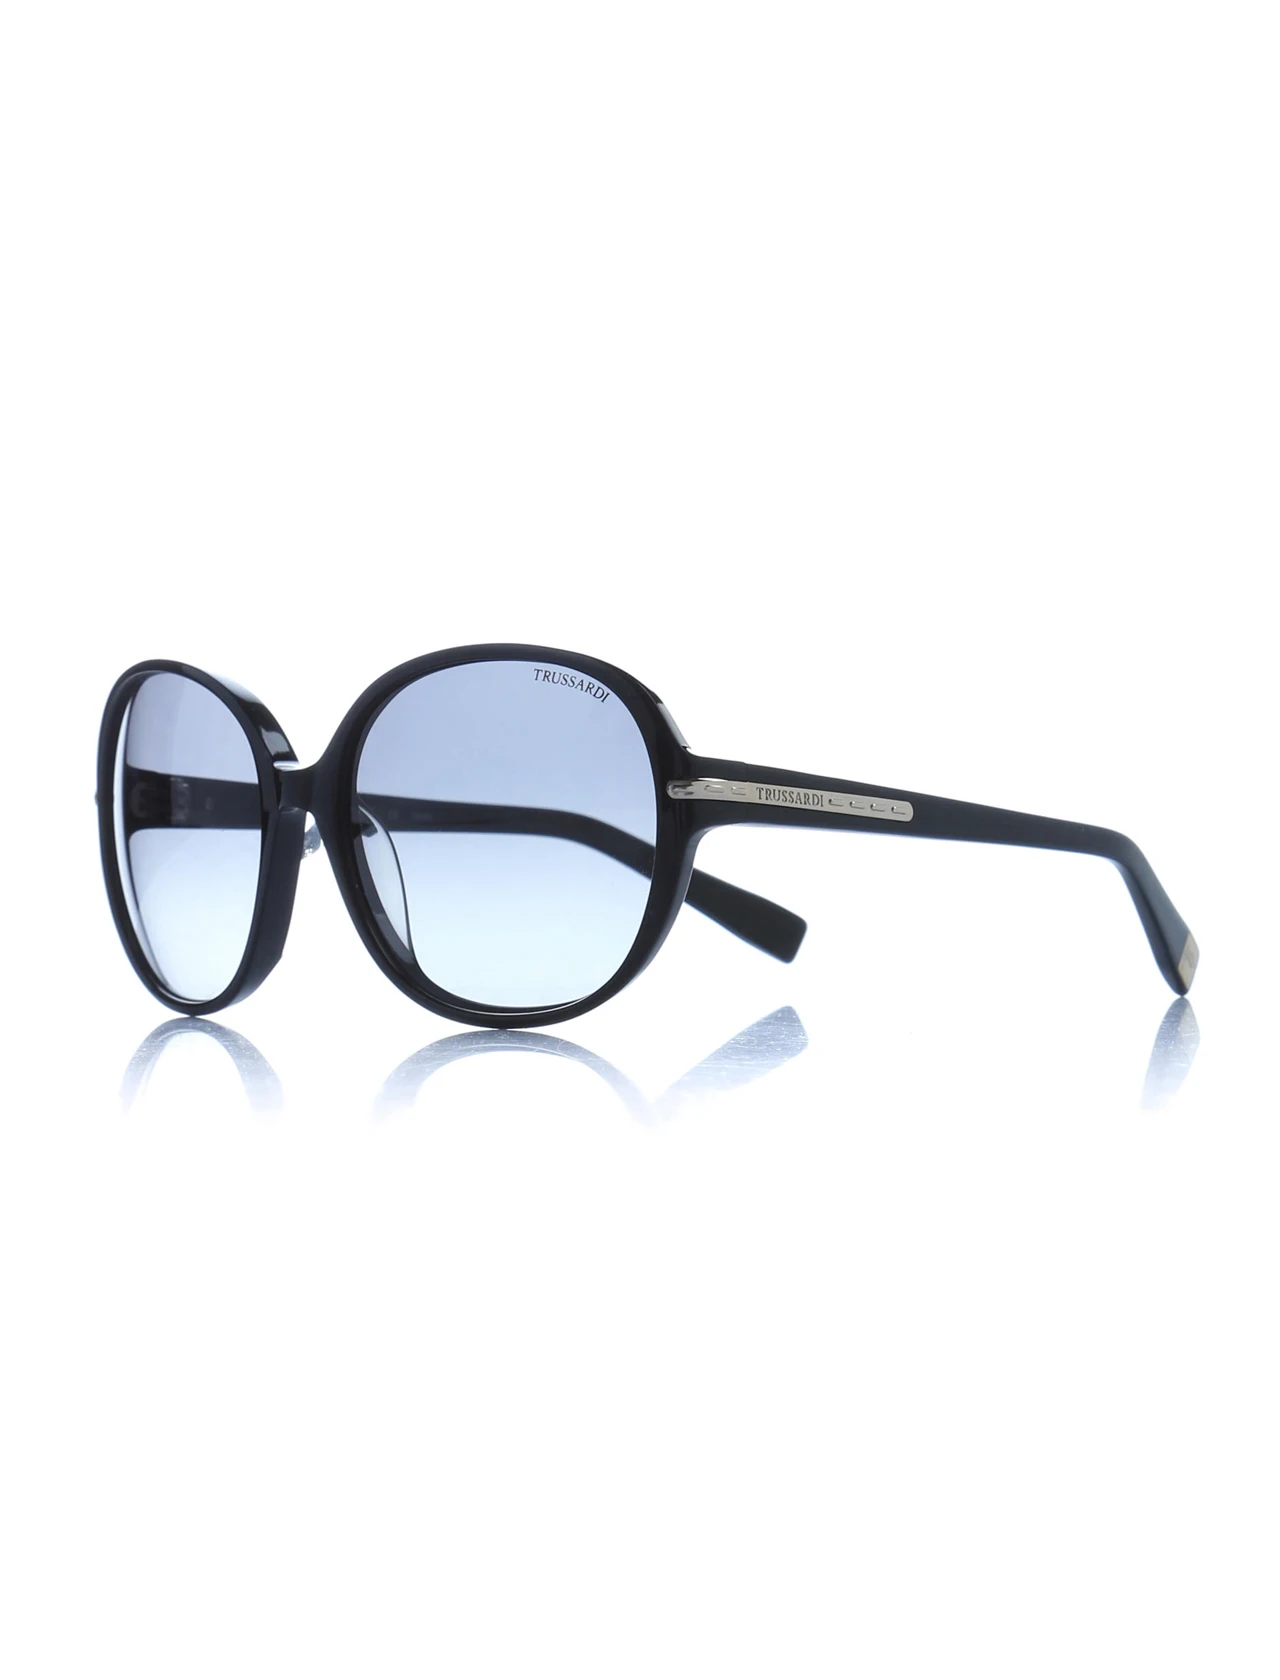 

Women's sunglasses trs 128 48 bk bone black organic oval aval 57-17-135 trussardi